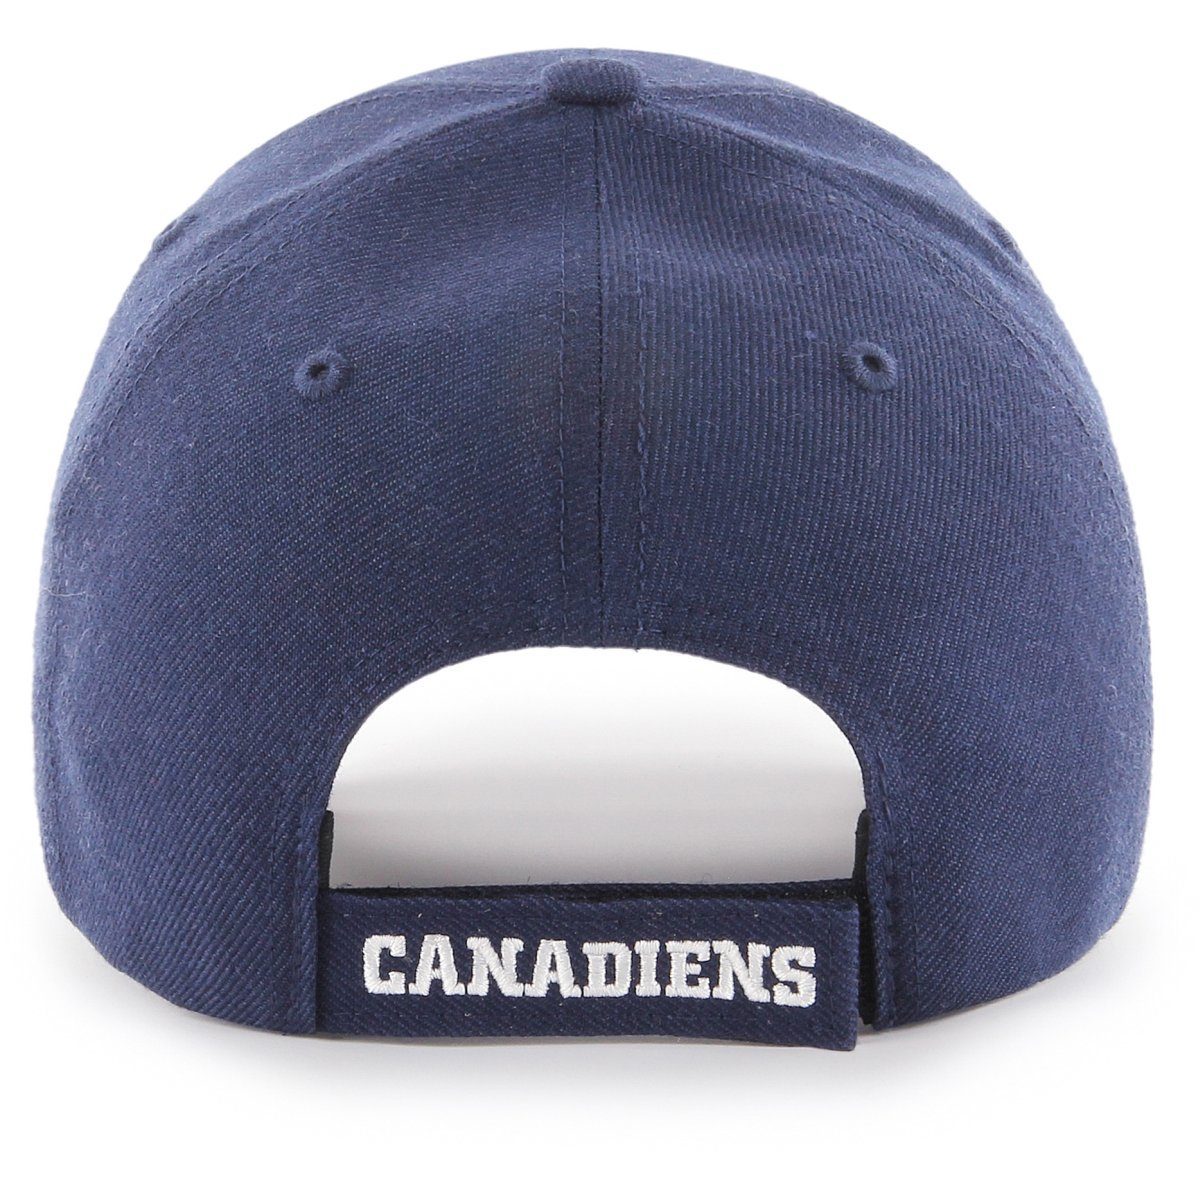 Brand '47 Baseball Cap NHL Canadians Montreal